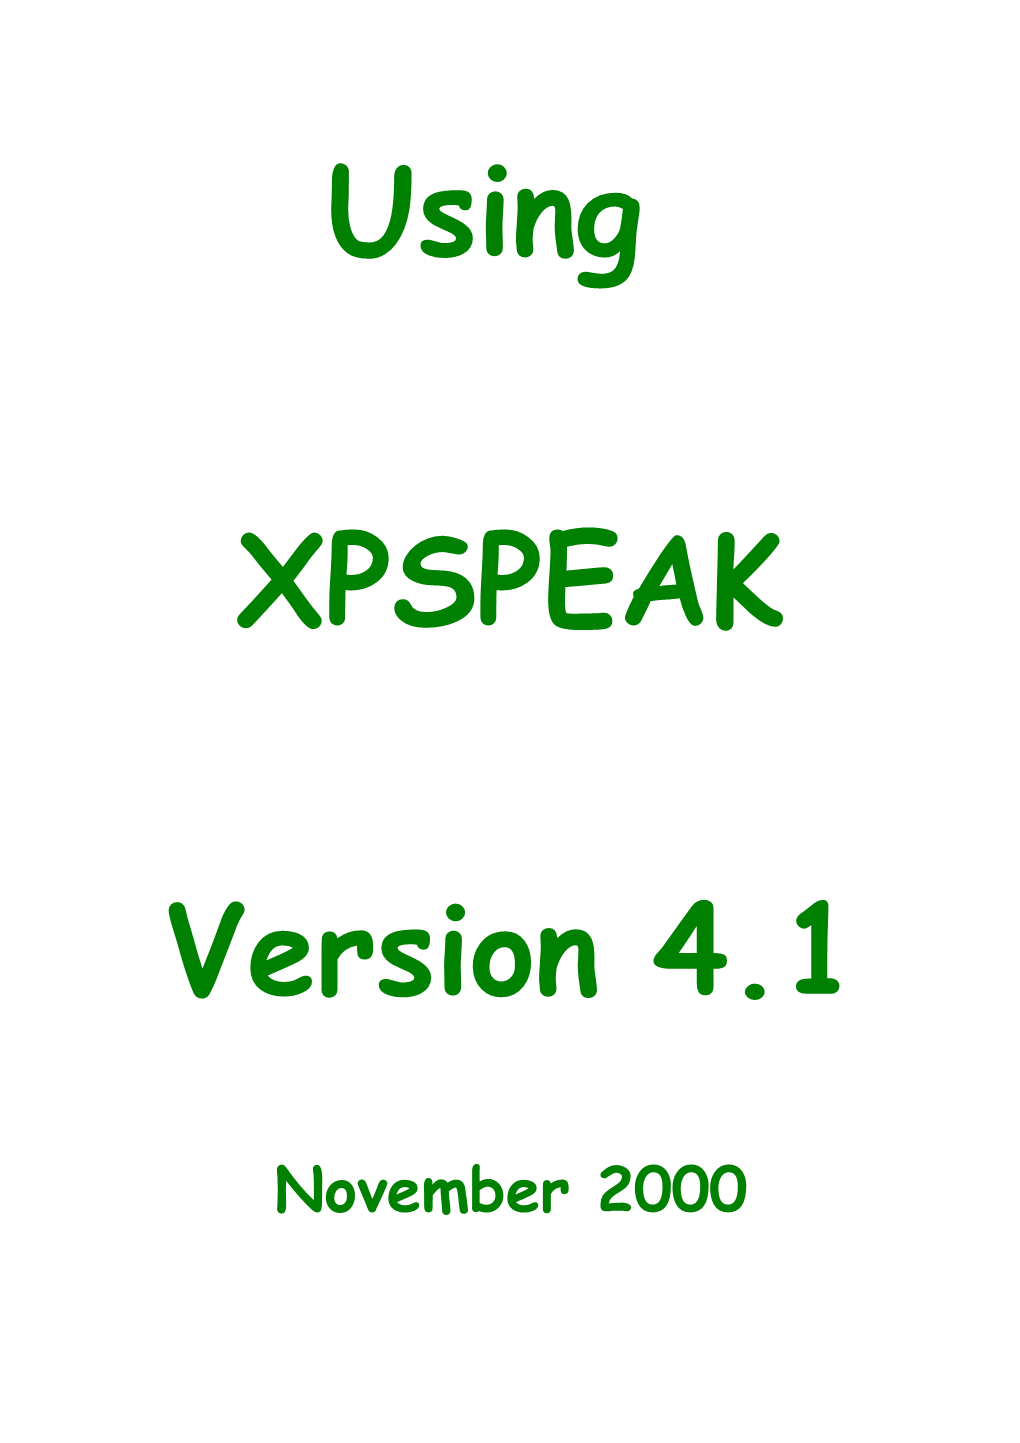 XPS Peak Fitting Program for WIN95/98 XPSPEAK Version 4.1 1